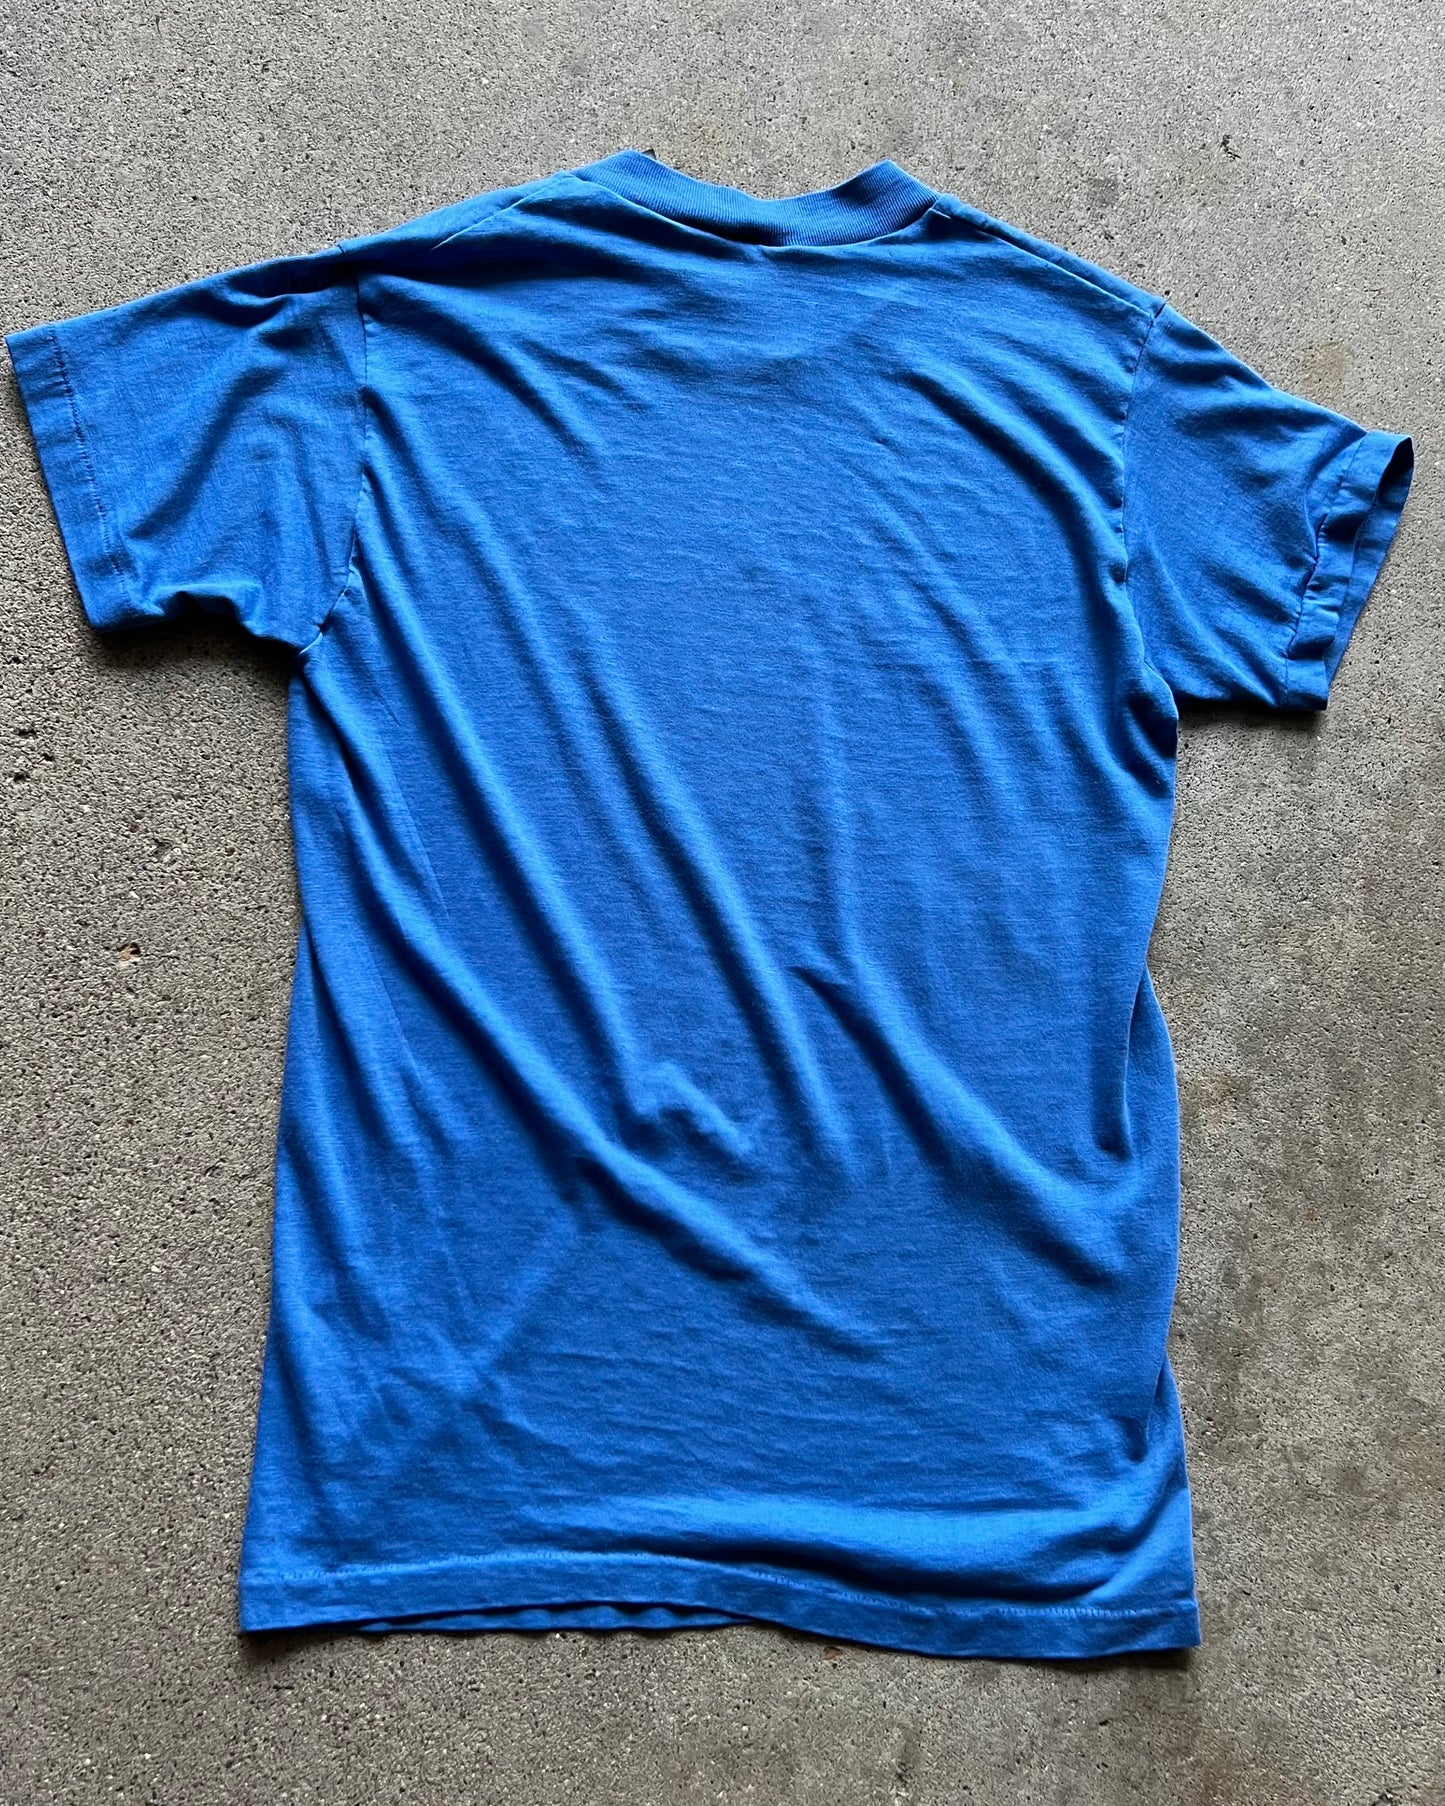 1980's U.S.A. Ratrace Team Official Member Single Stitch T-Shirt